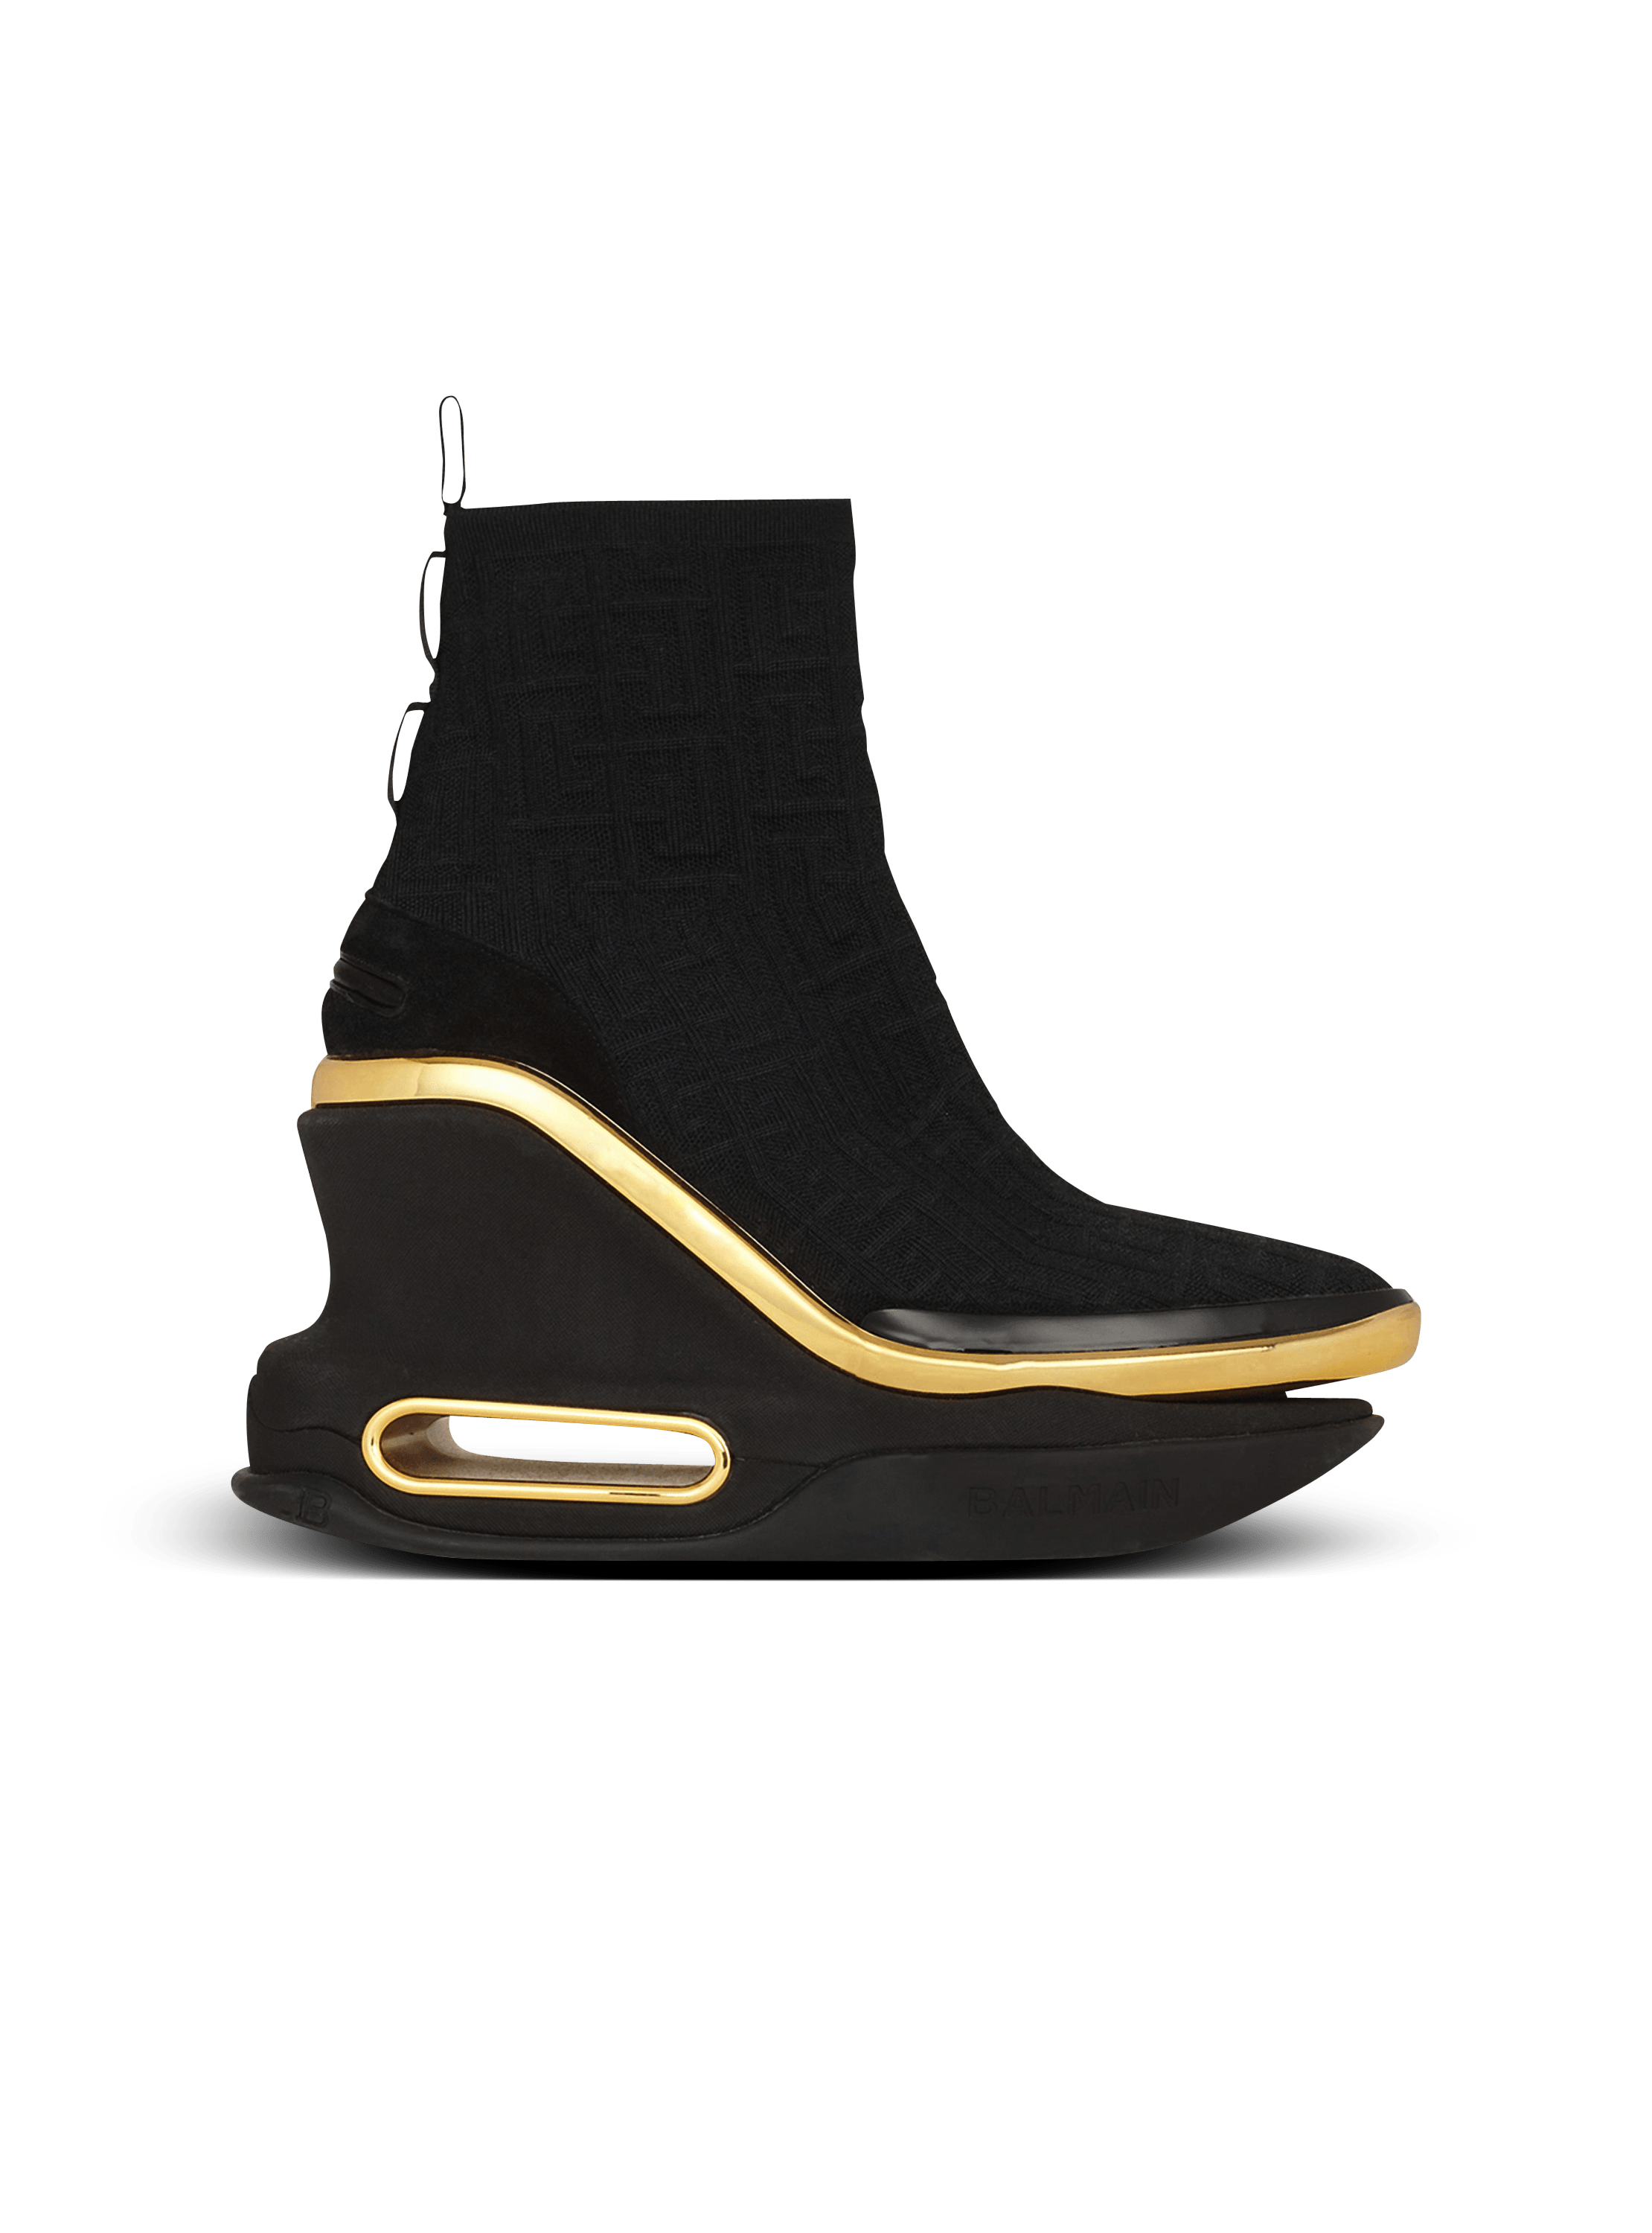 Heightened Style: Pierre Balmain's Wedge Sneakers